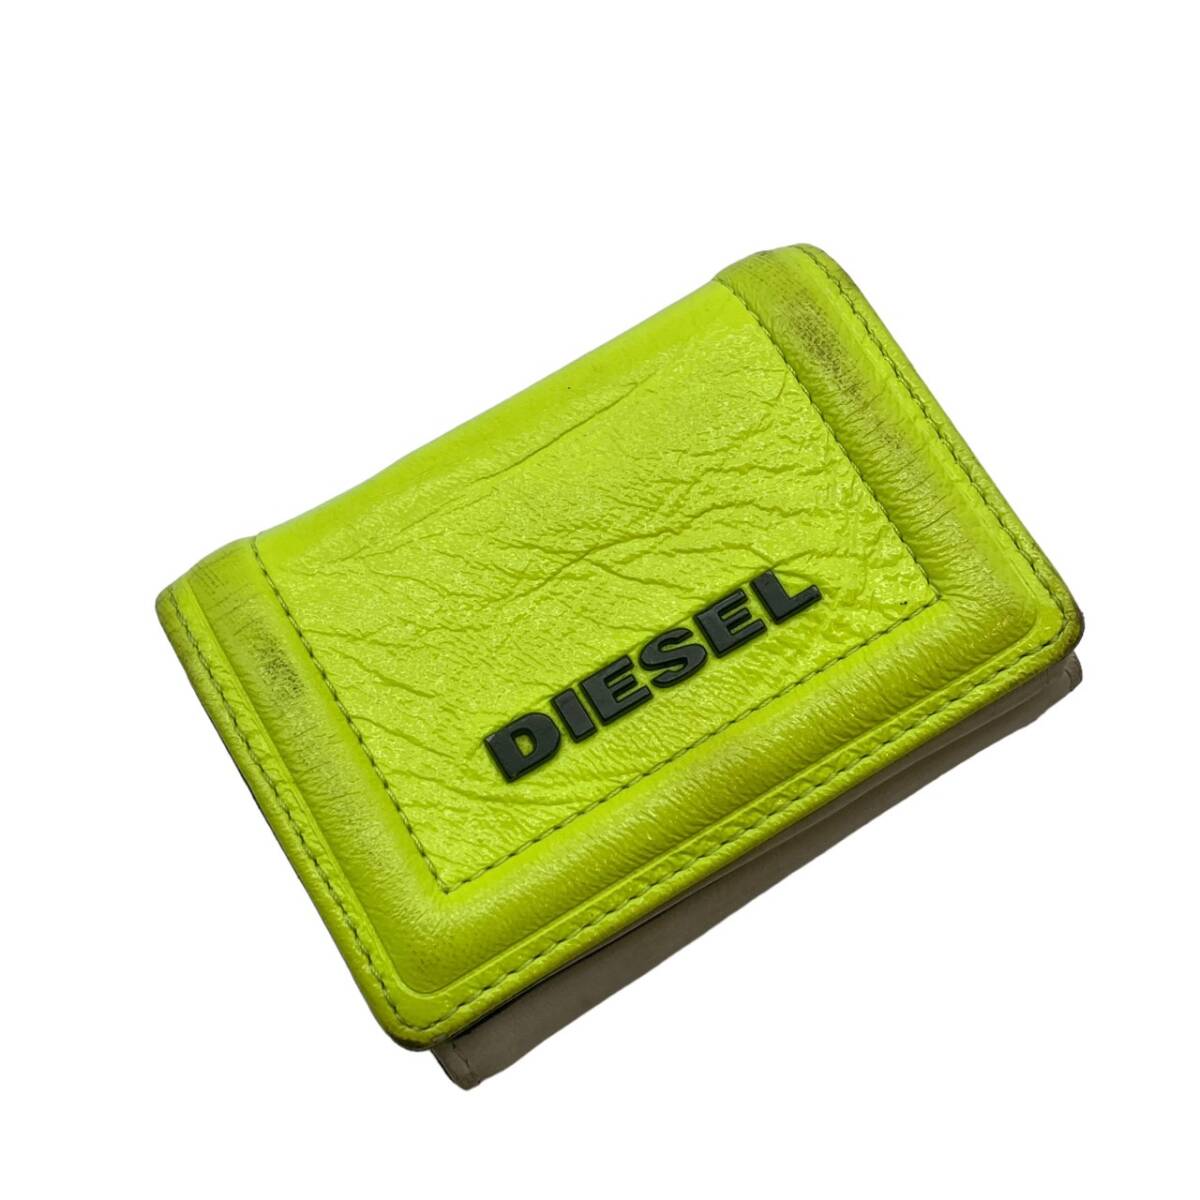 1 jpy DIESEL diesel three folding purse yellow group × white group 